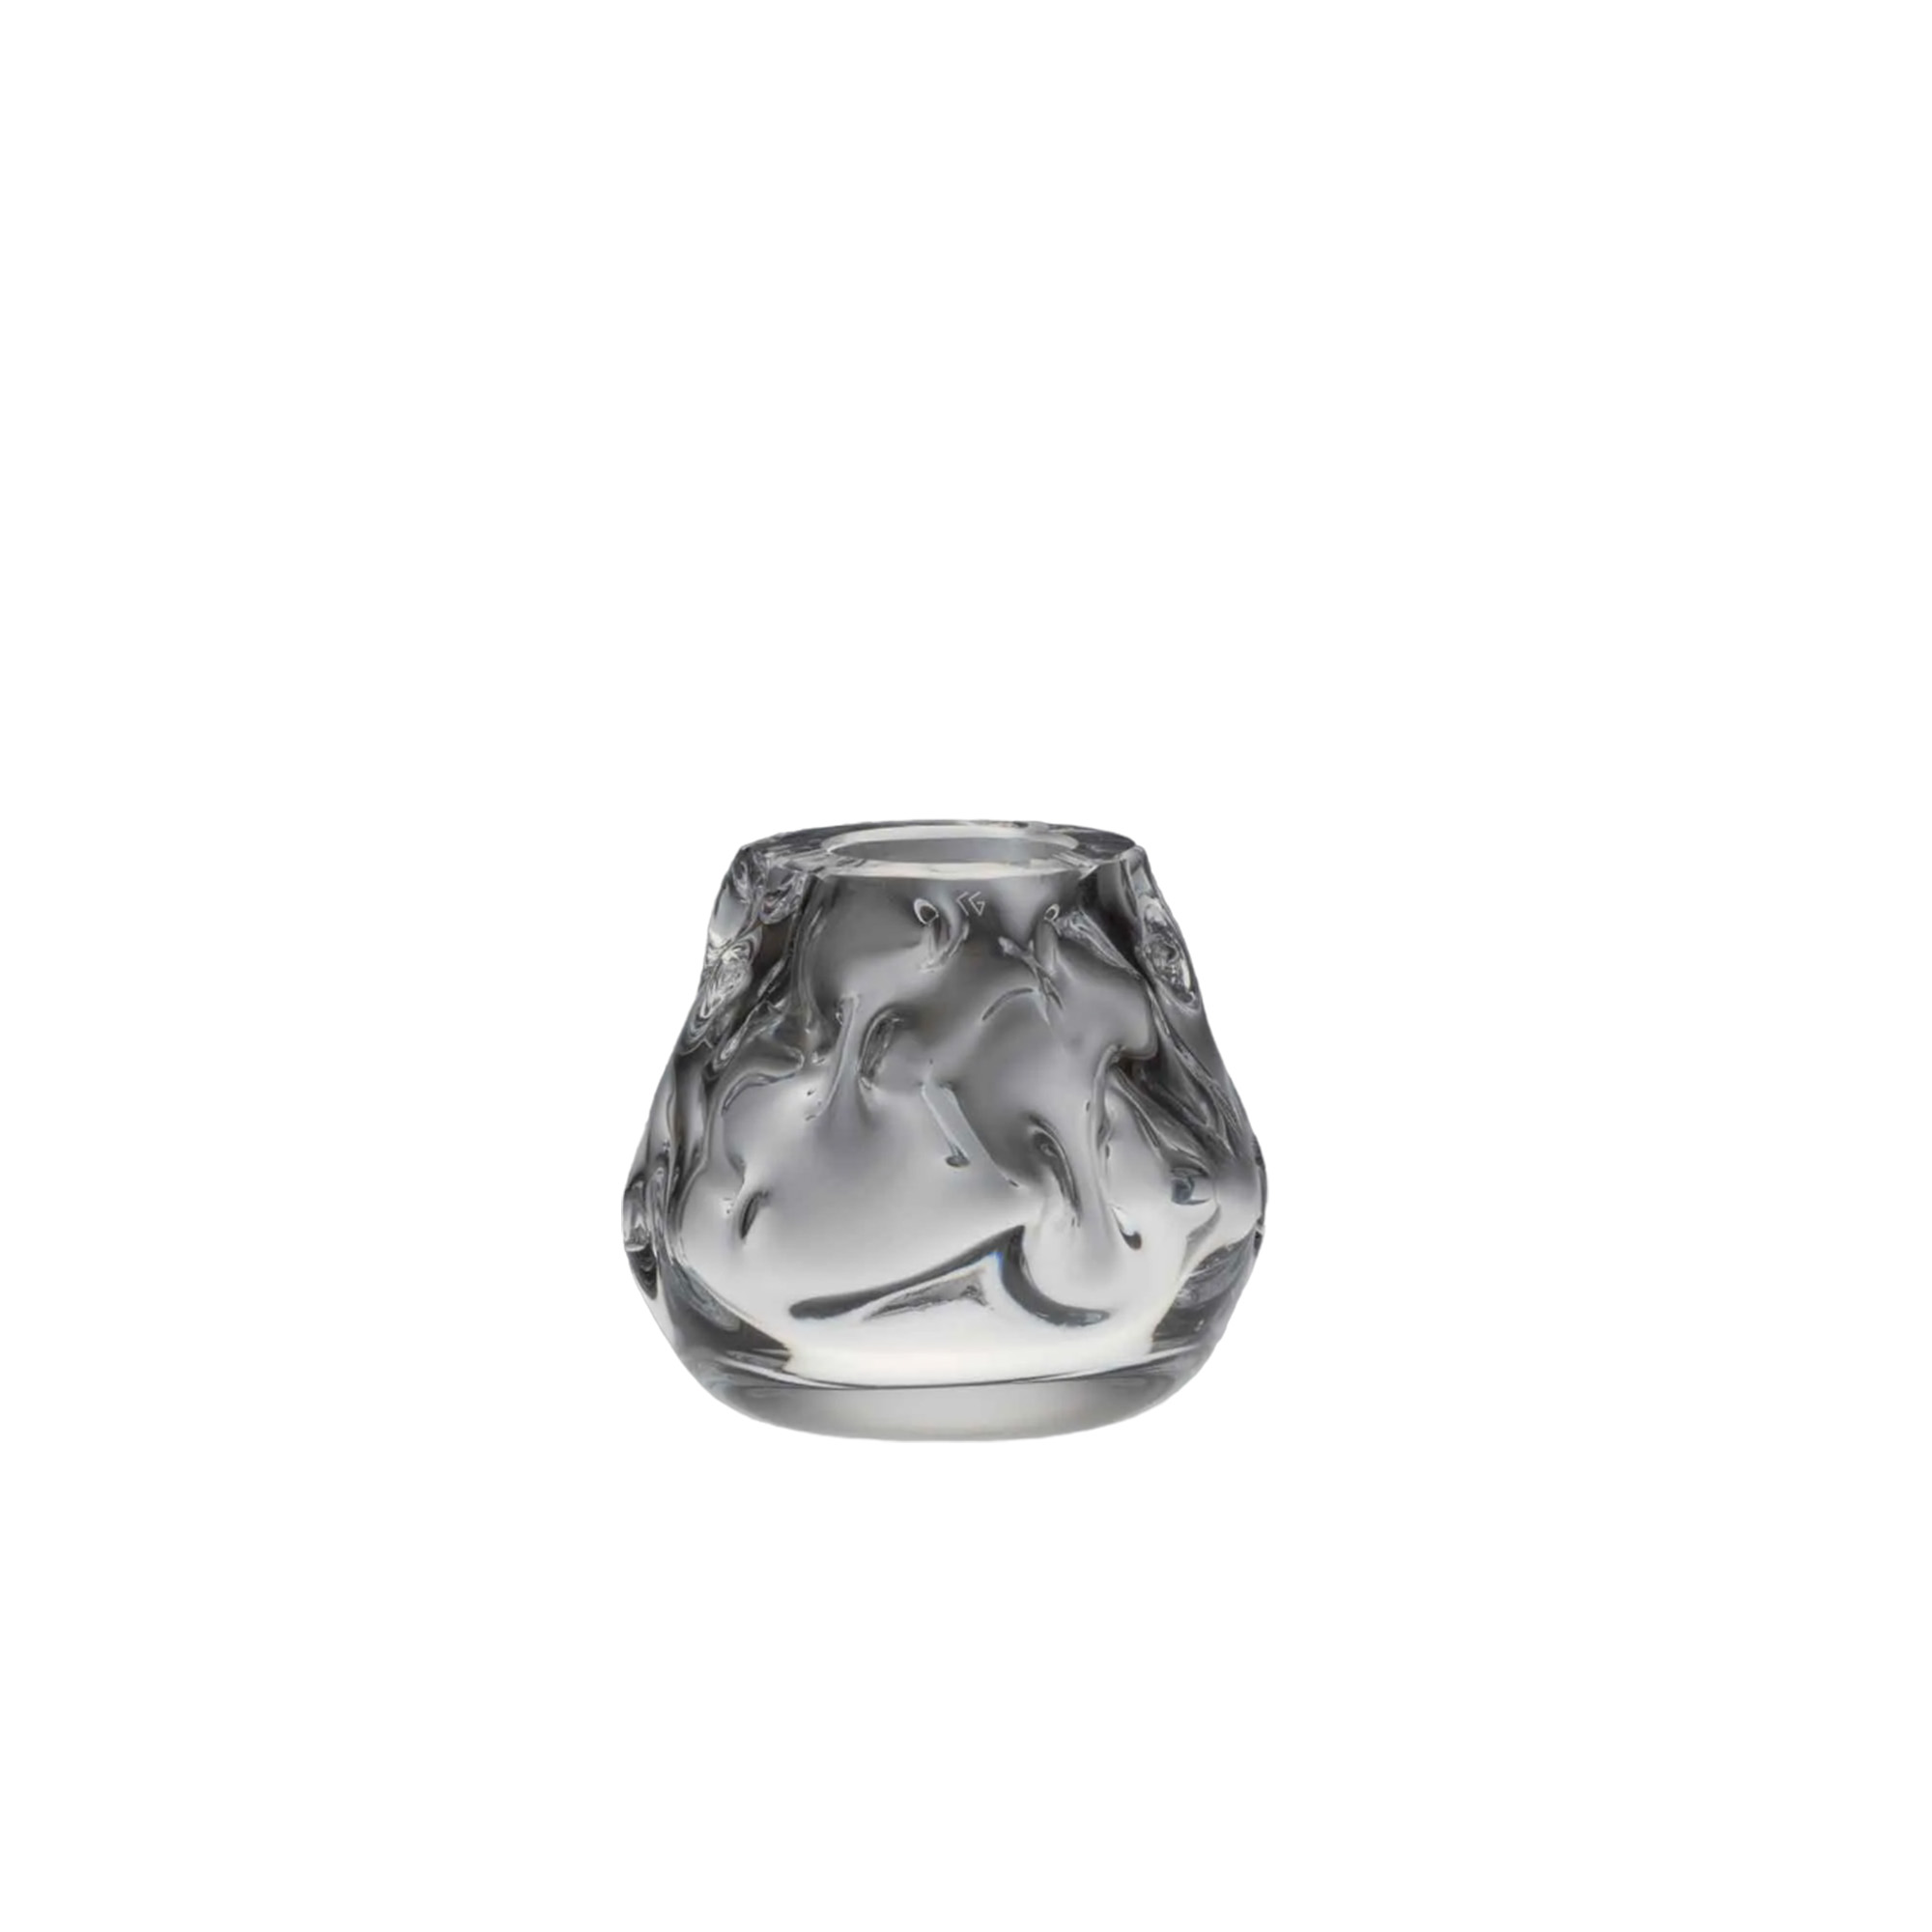 Mini Vaso Espinhos multi | incolor base aço inox  - Marché Art de Vie